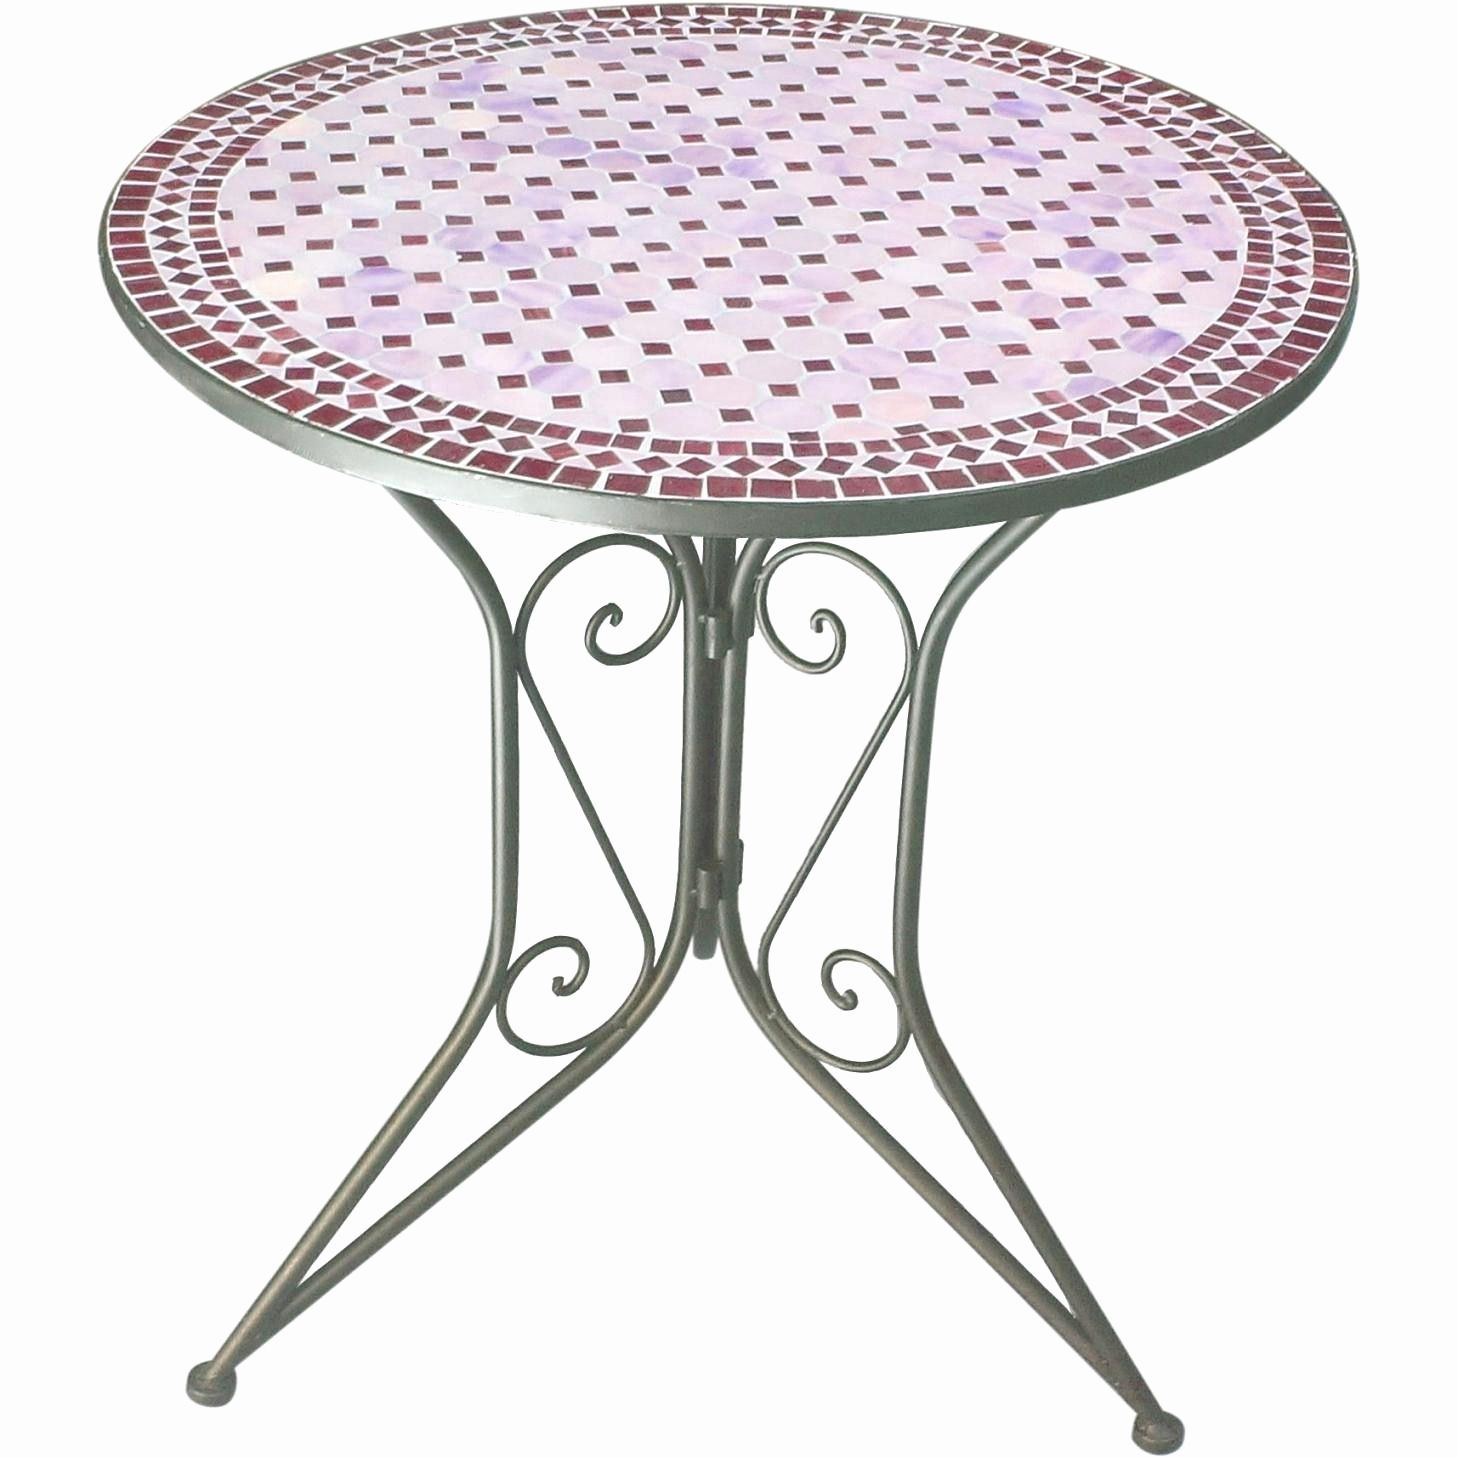 Table Inspirant Table De Jardin Ronde Inspirant Table De Jardin Ceramique